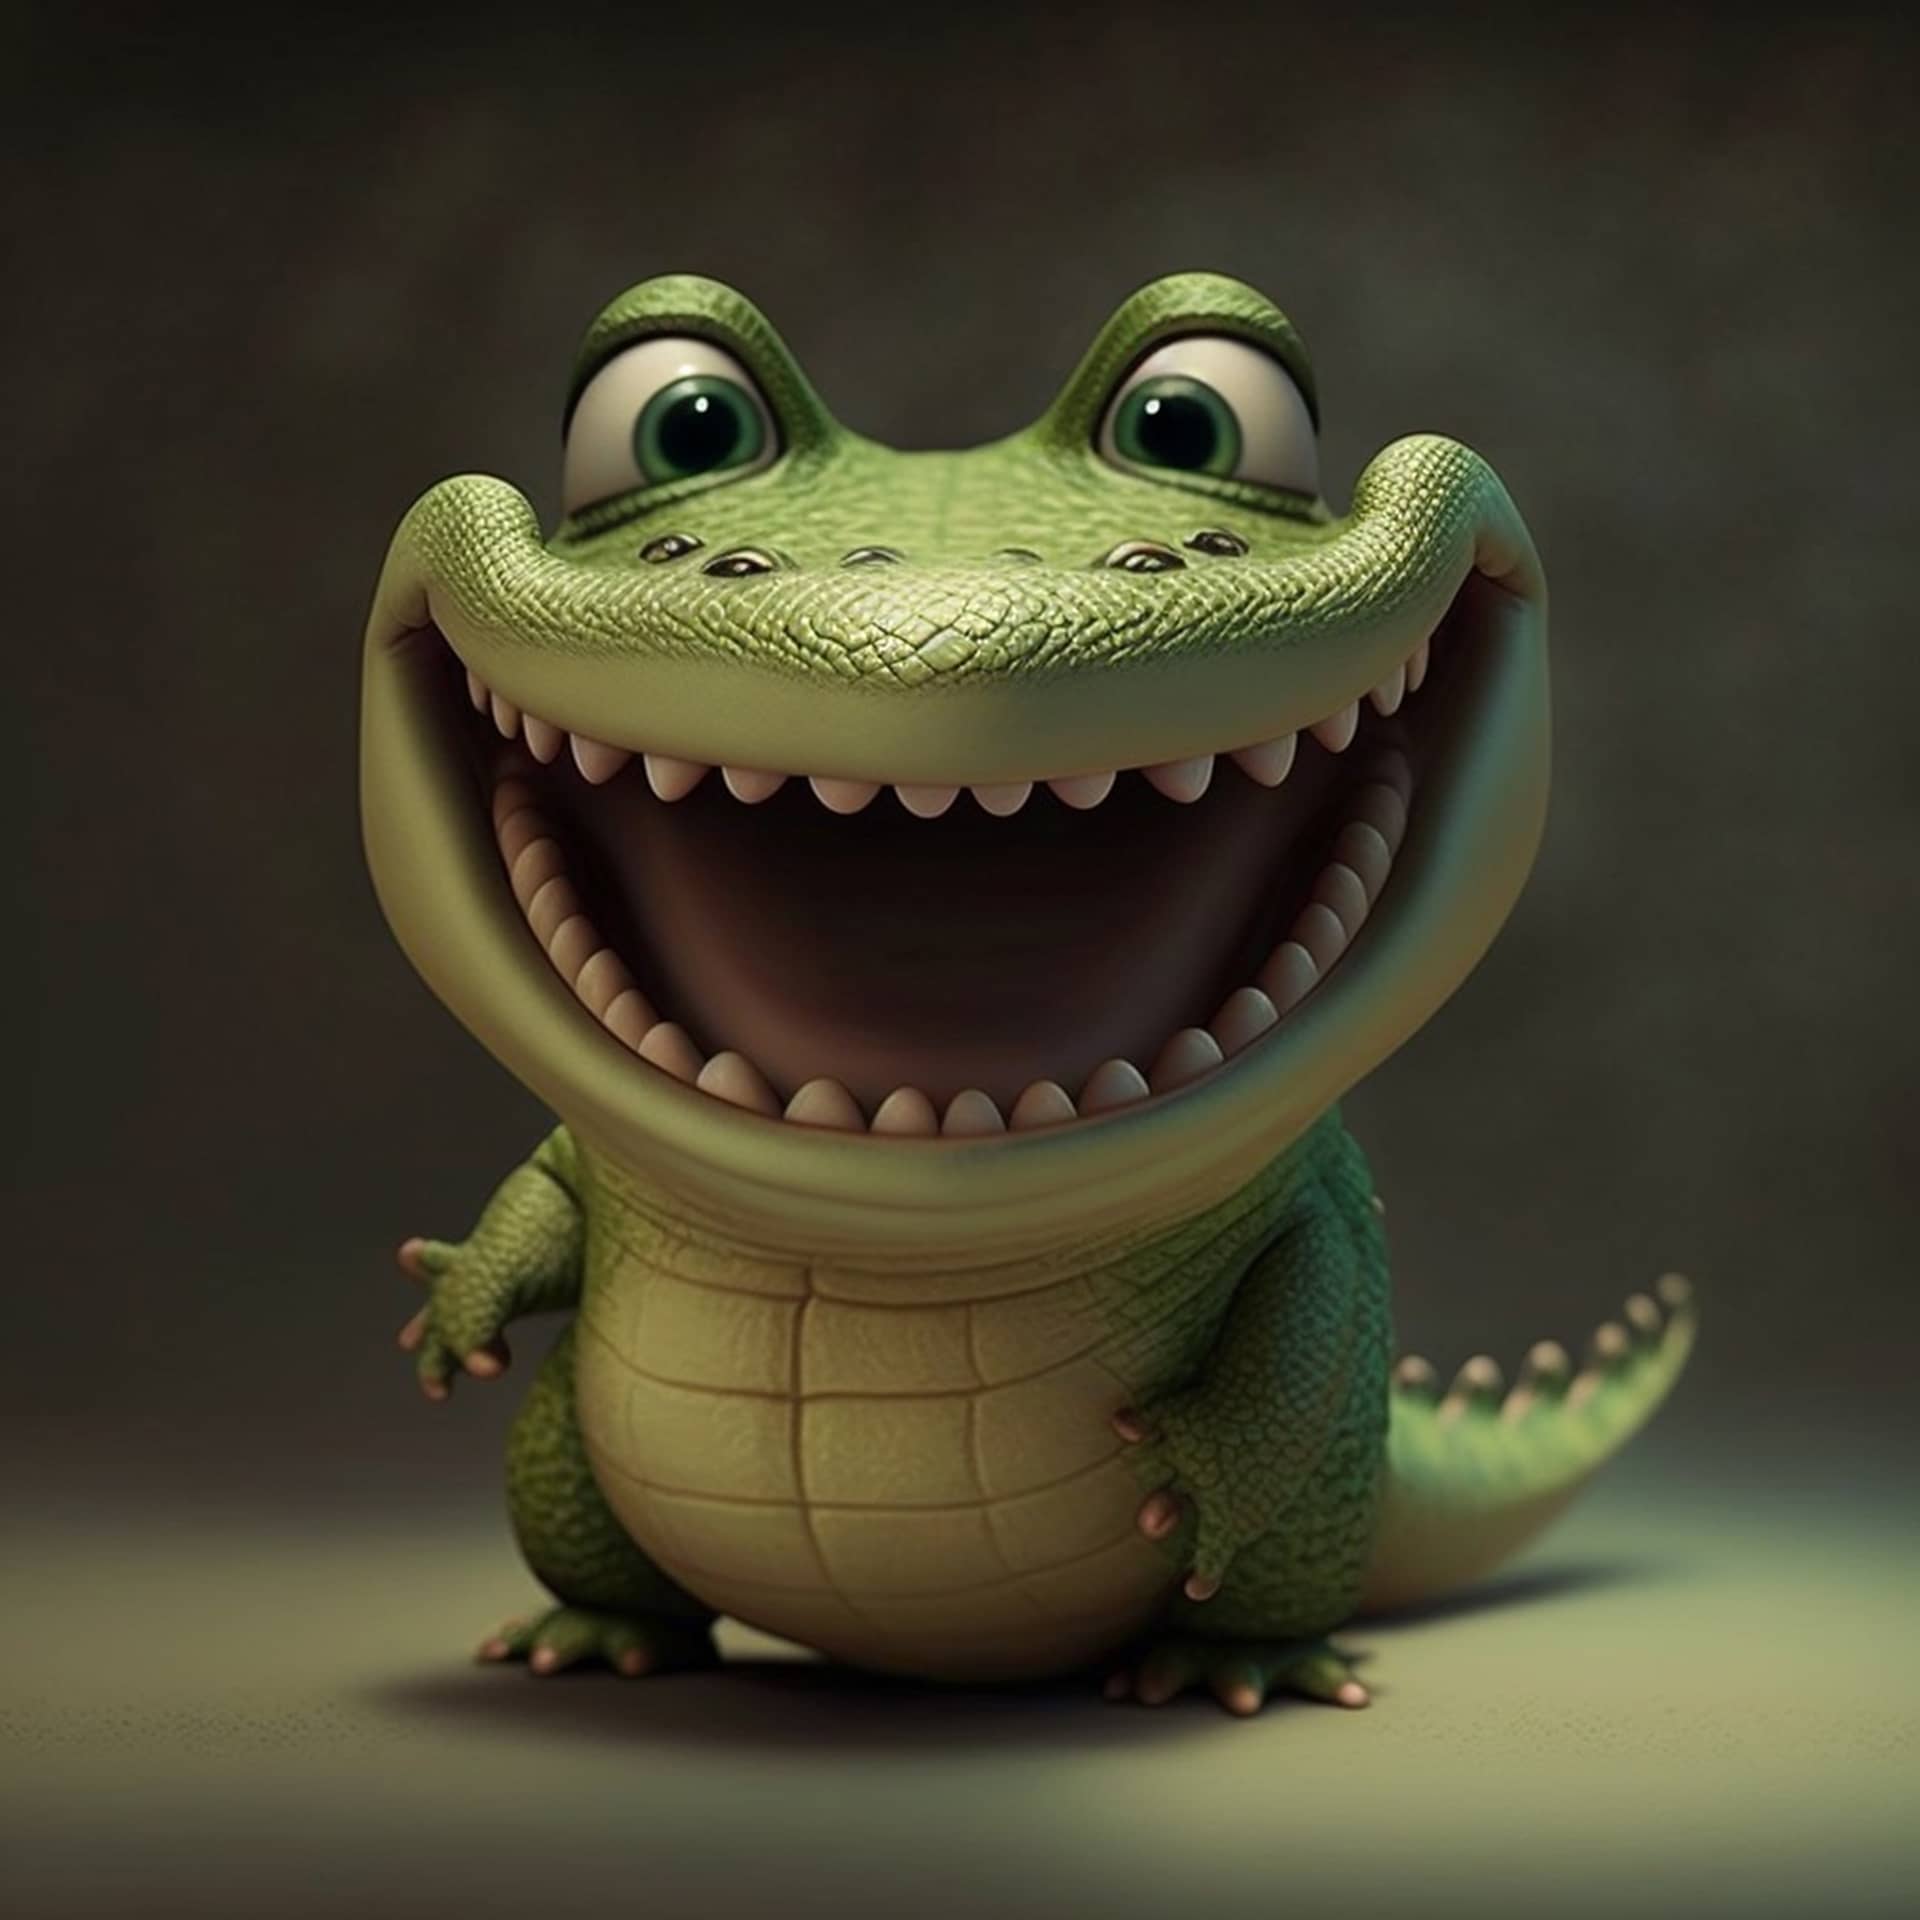 Cute crocodile character cute profile photos